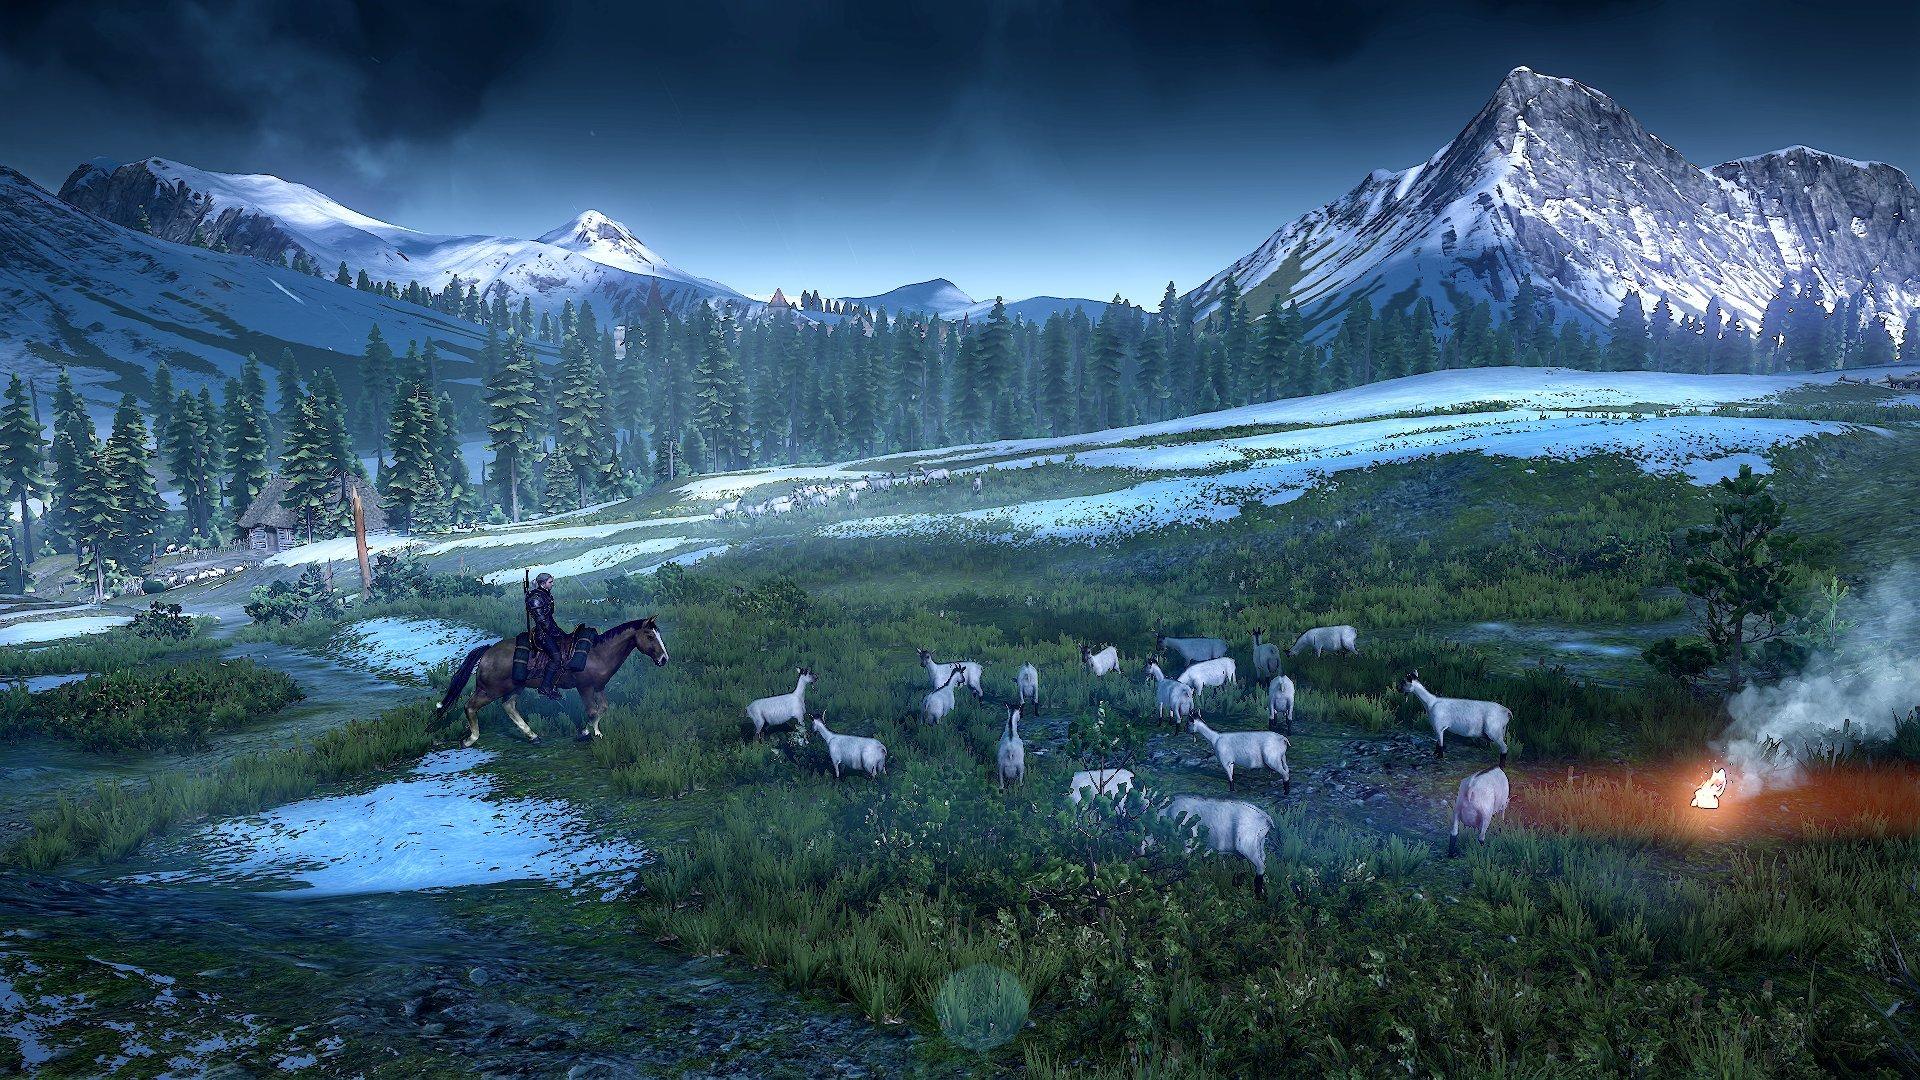 The Witcher III: Wild Hunt - Xbox One